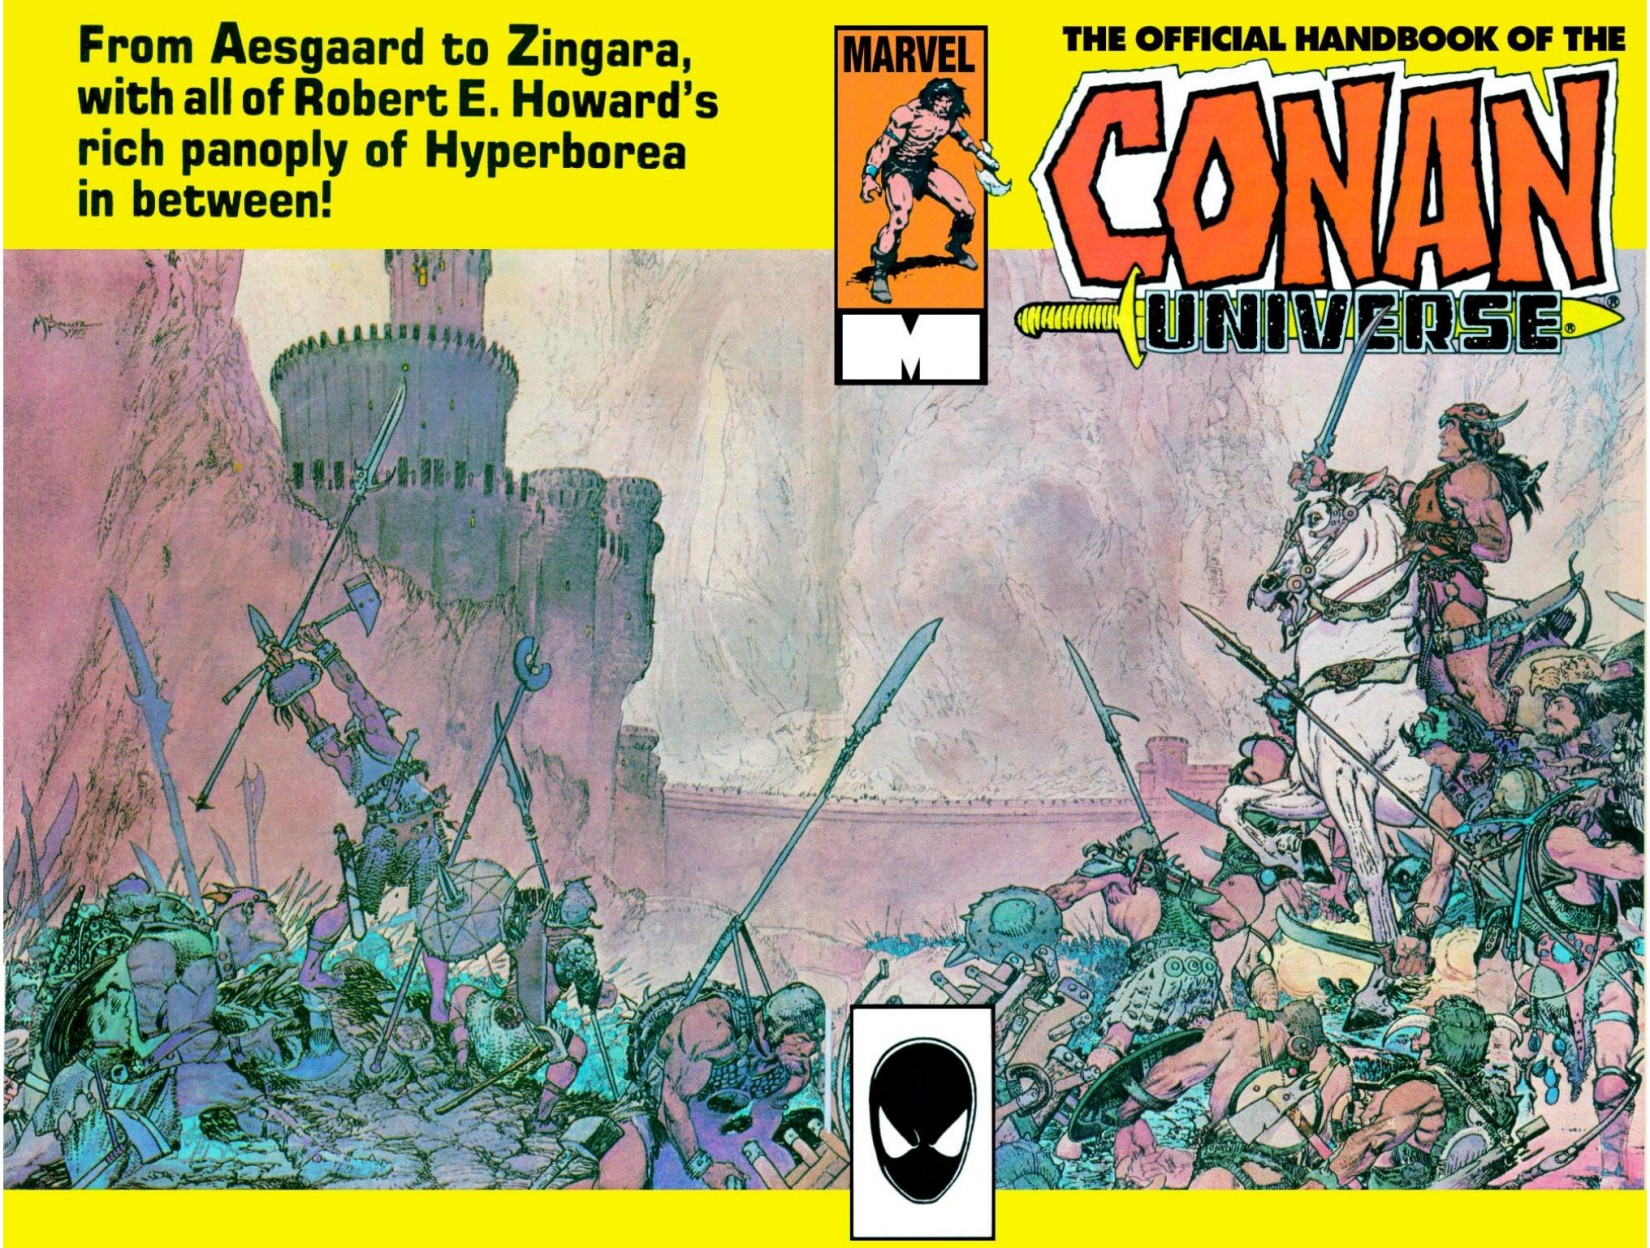 Marvel Official Handbook of the Conan Universe